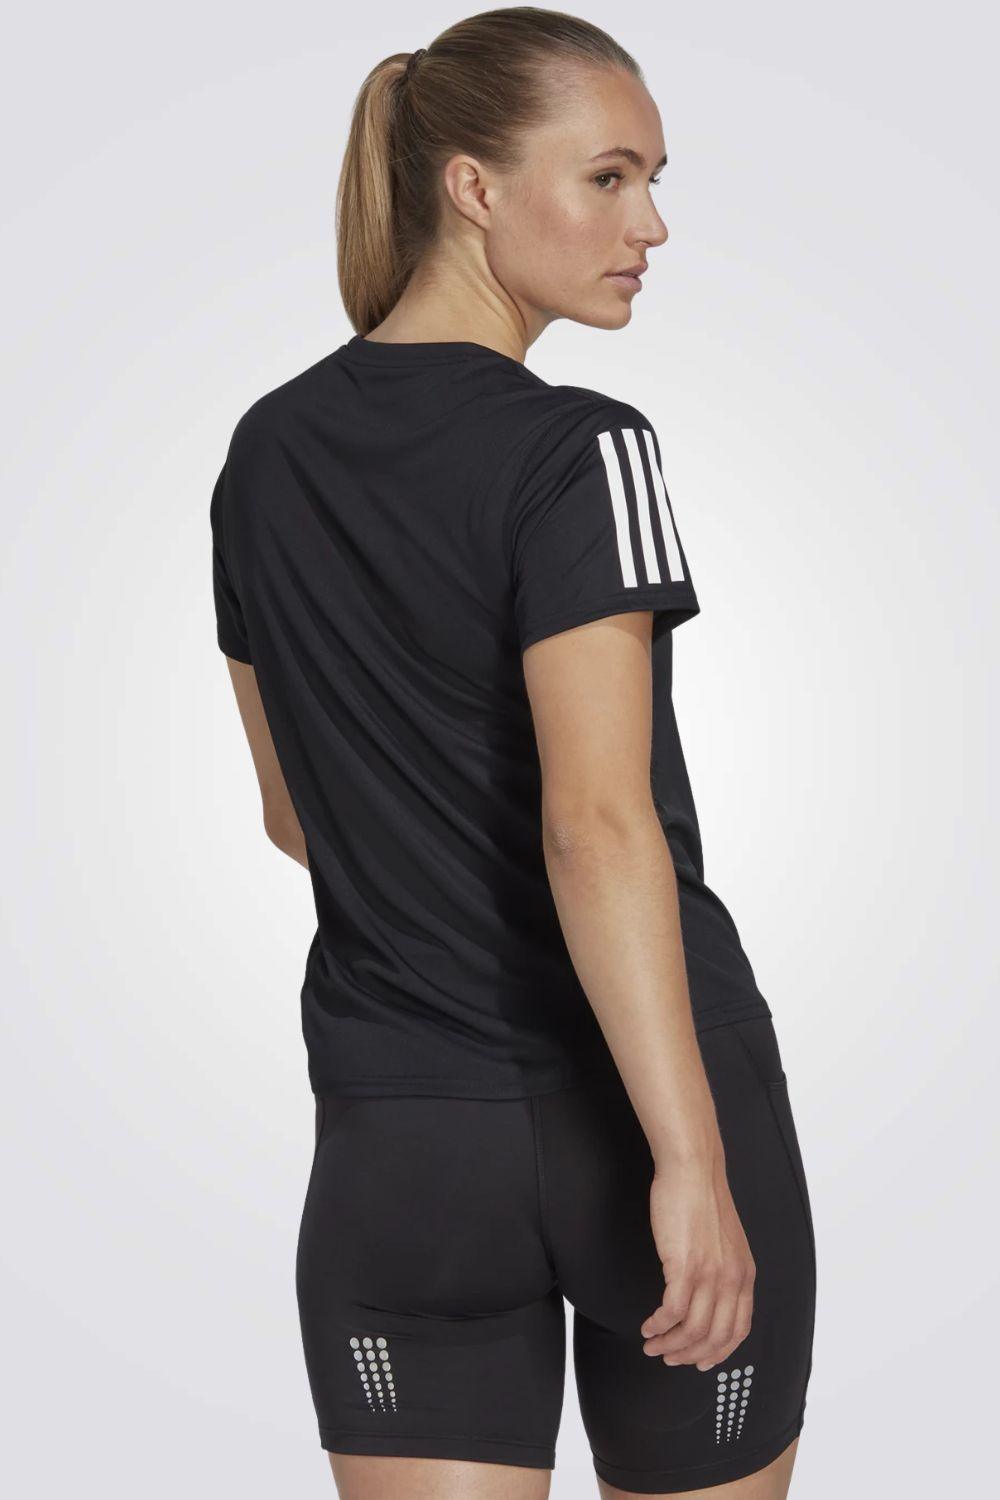 ADIDAS - חולצה לנשים OWN THE RUN בצבע שחור - MASHBIR//365